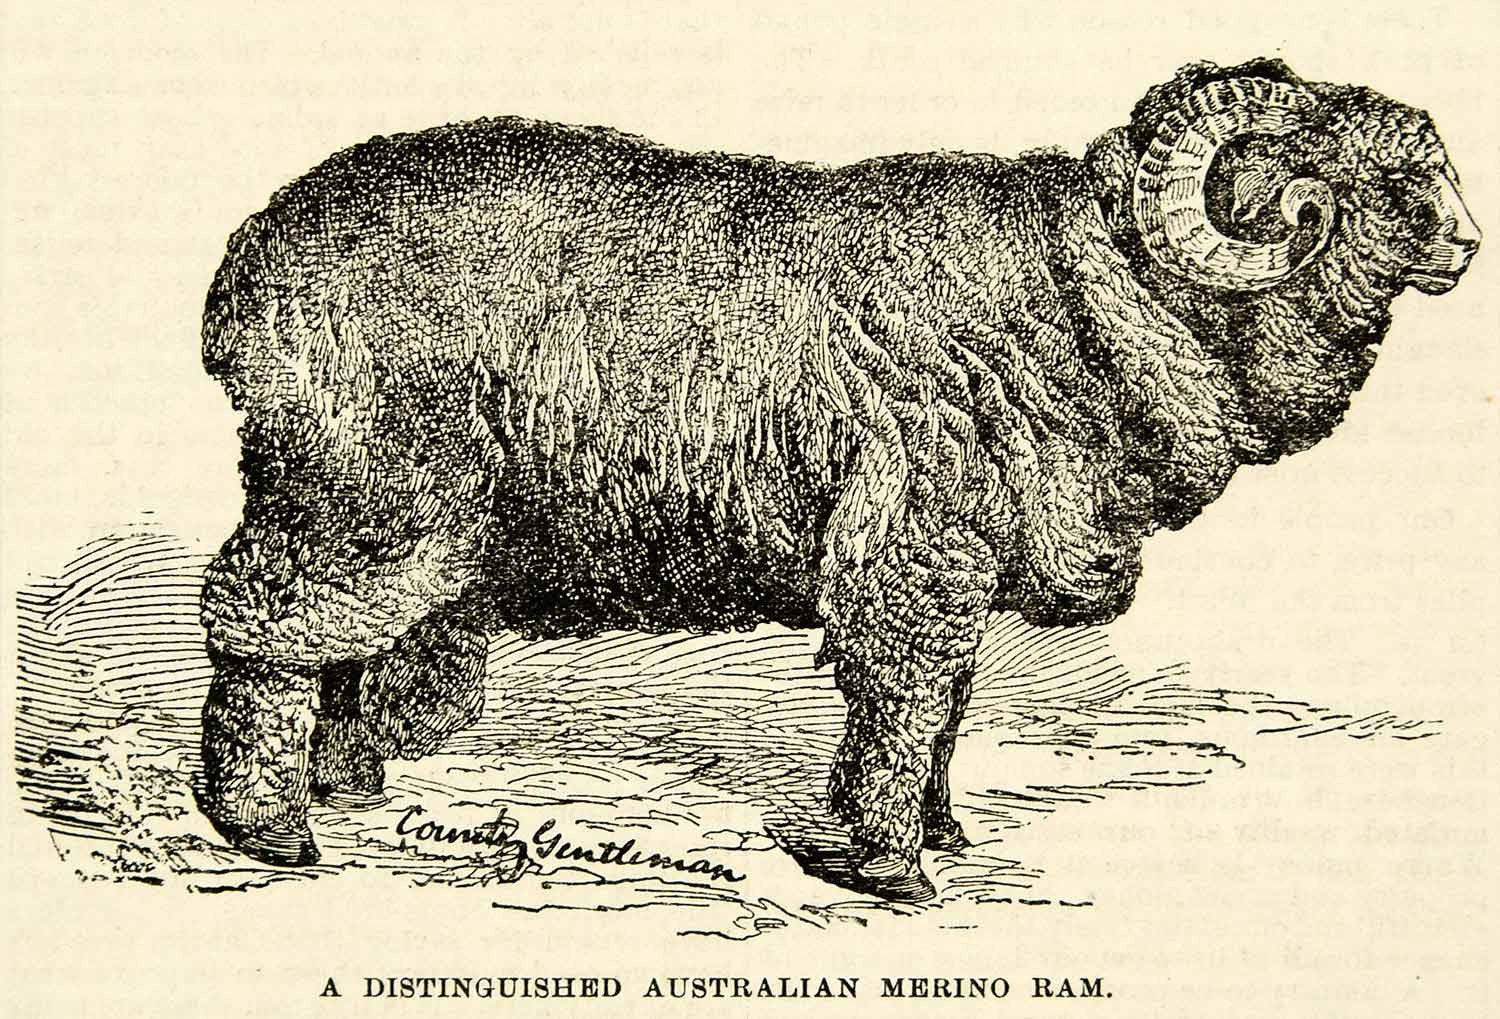 1893 Wood Engraving Australian Merino Ram Sheep Horns Wool Coat Breed CCG2 - Period Paper
